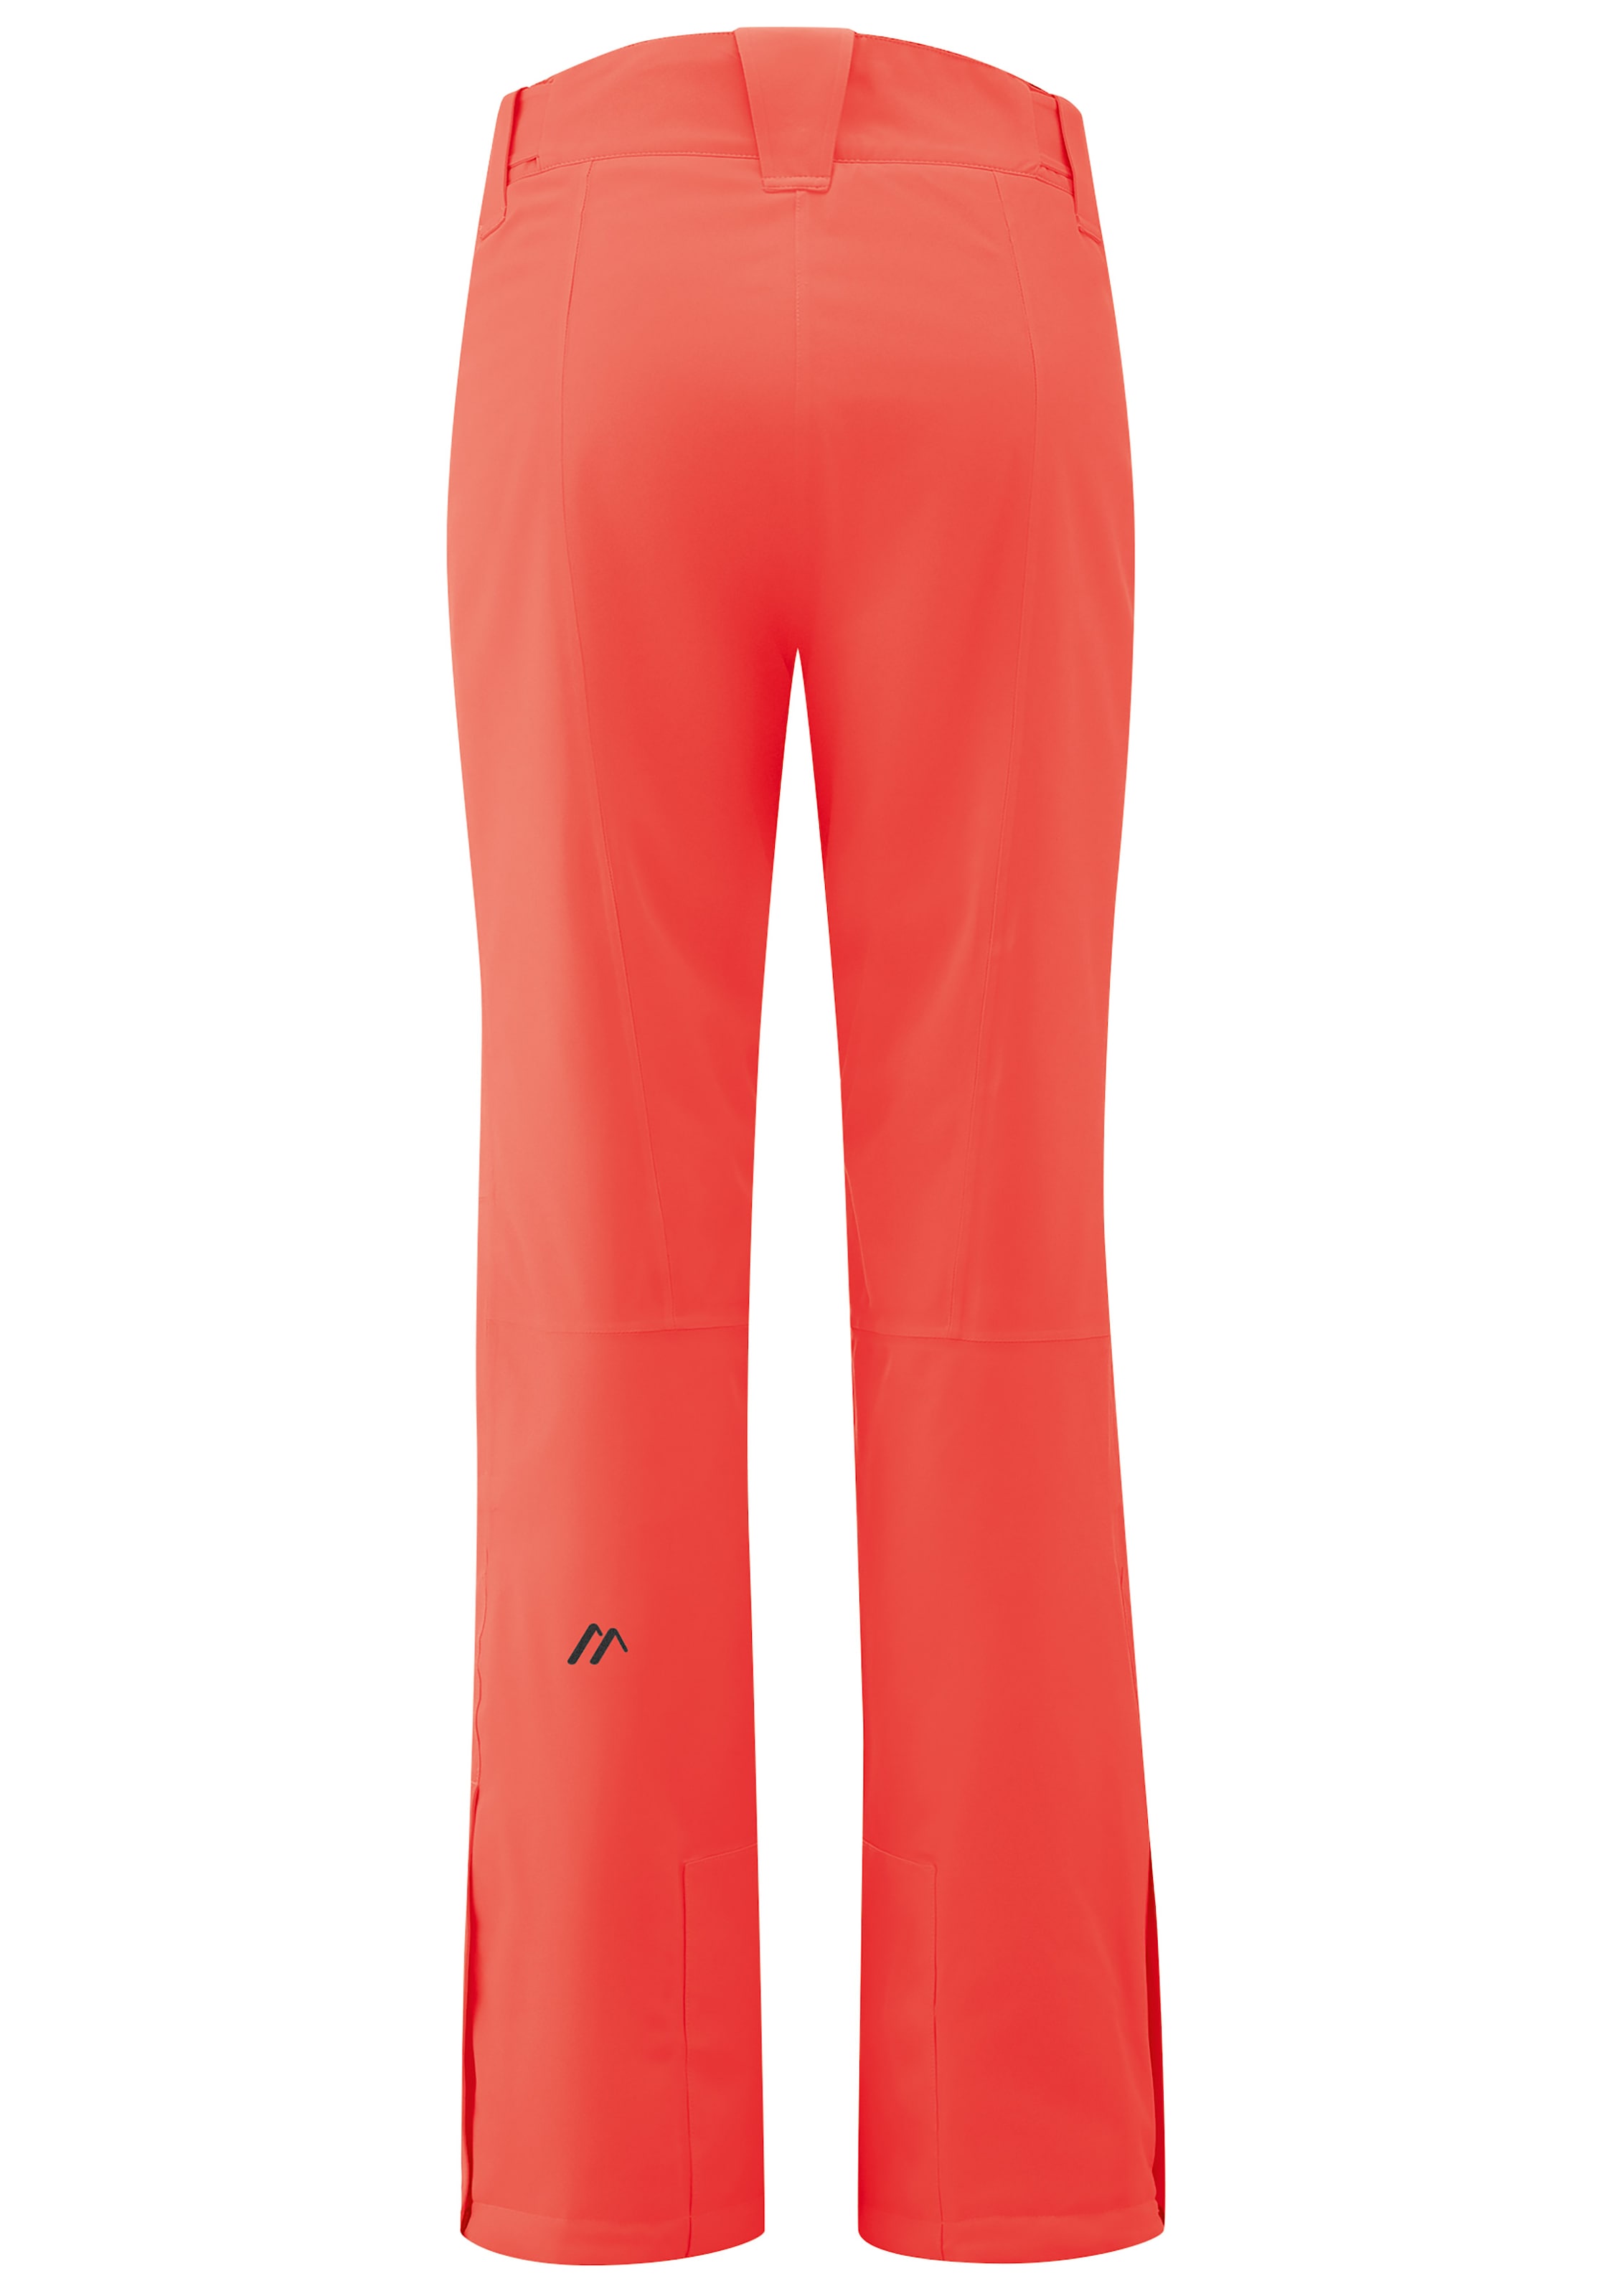 Maier Sports Skihose »Coral bei sportliche online in schlanker Feminin, Silhouette Pants«, Schweiz Jelmoli-Versand shoppen Skihose